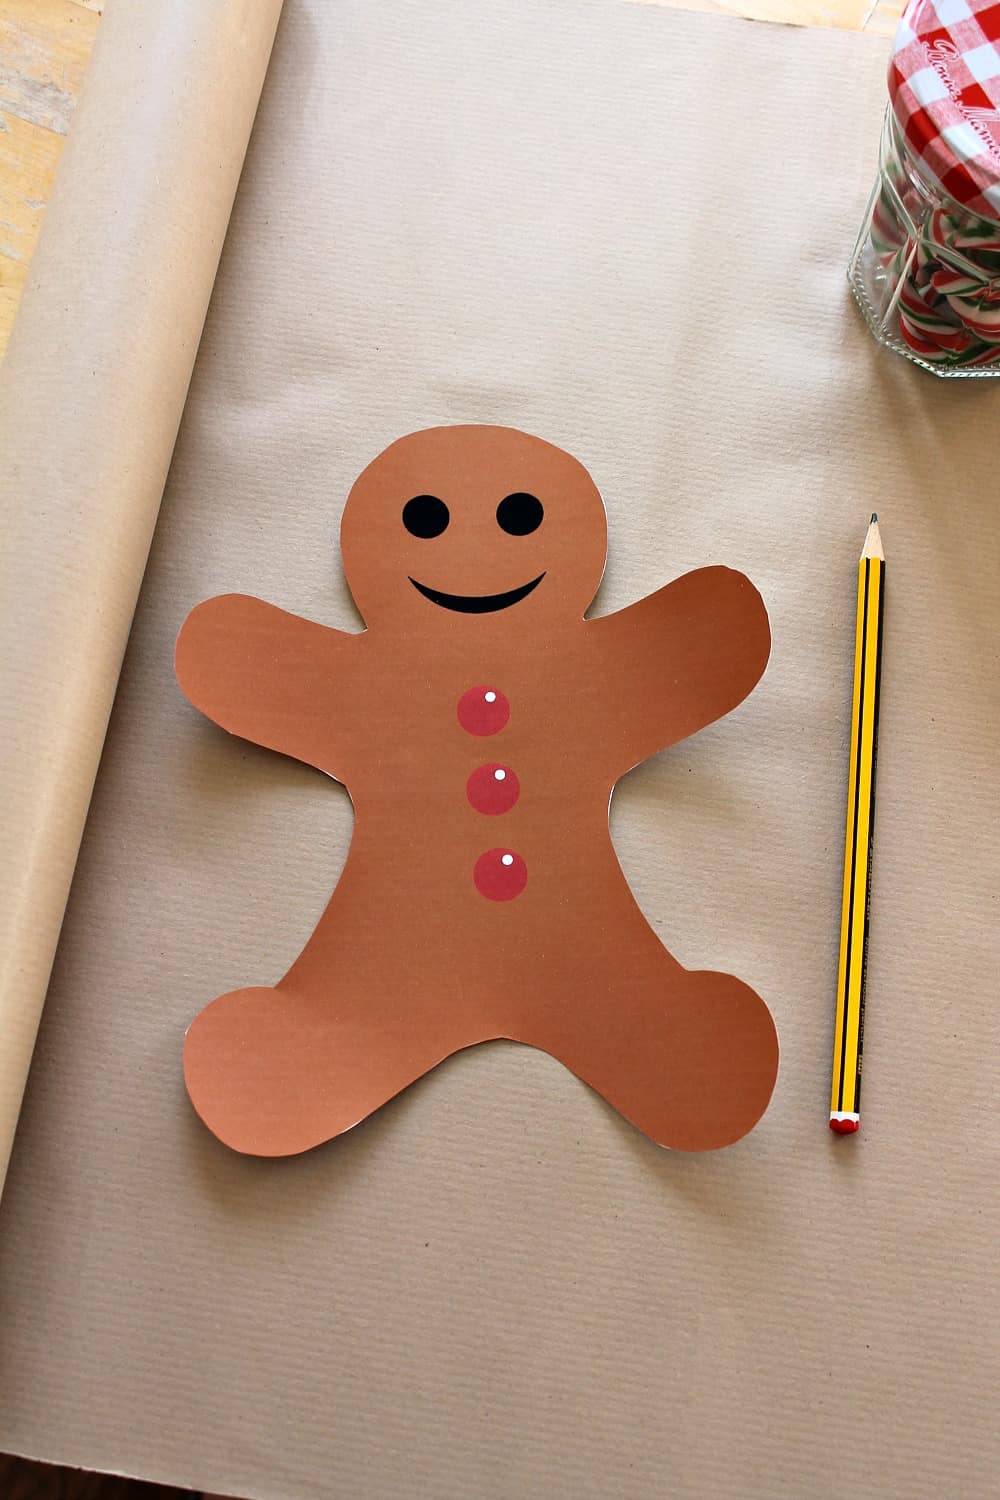 easy-gingerbread-man-craft-with-template-for-stapler-skills-nurturestore